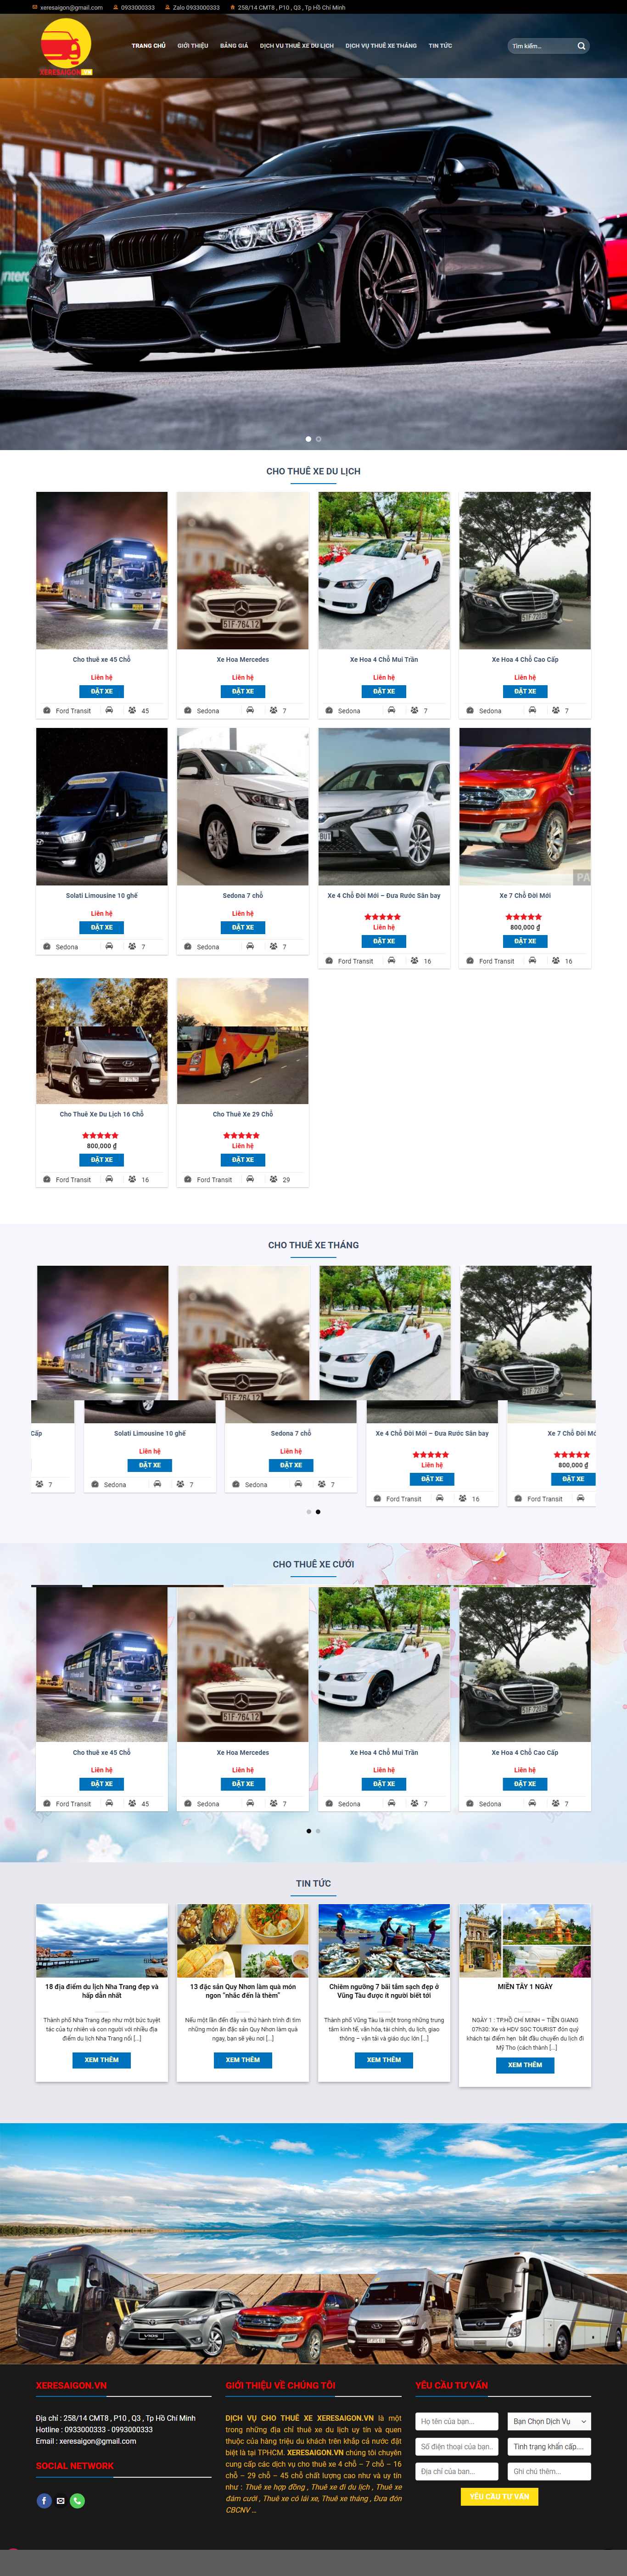 Thiết kế Website thuê xe du lịch - xeresaigon.vn